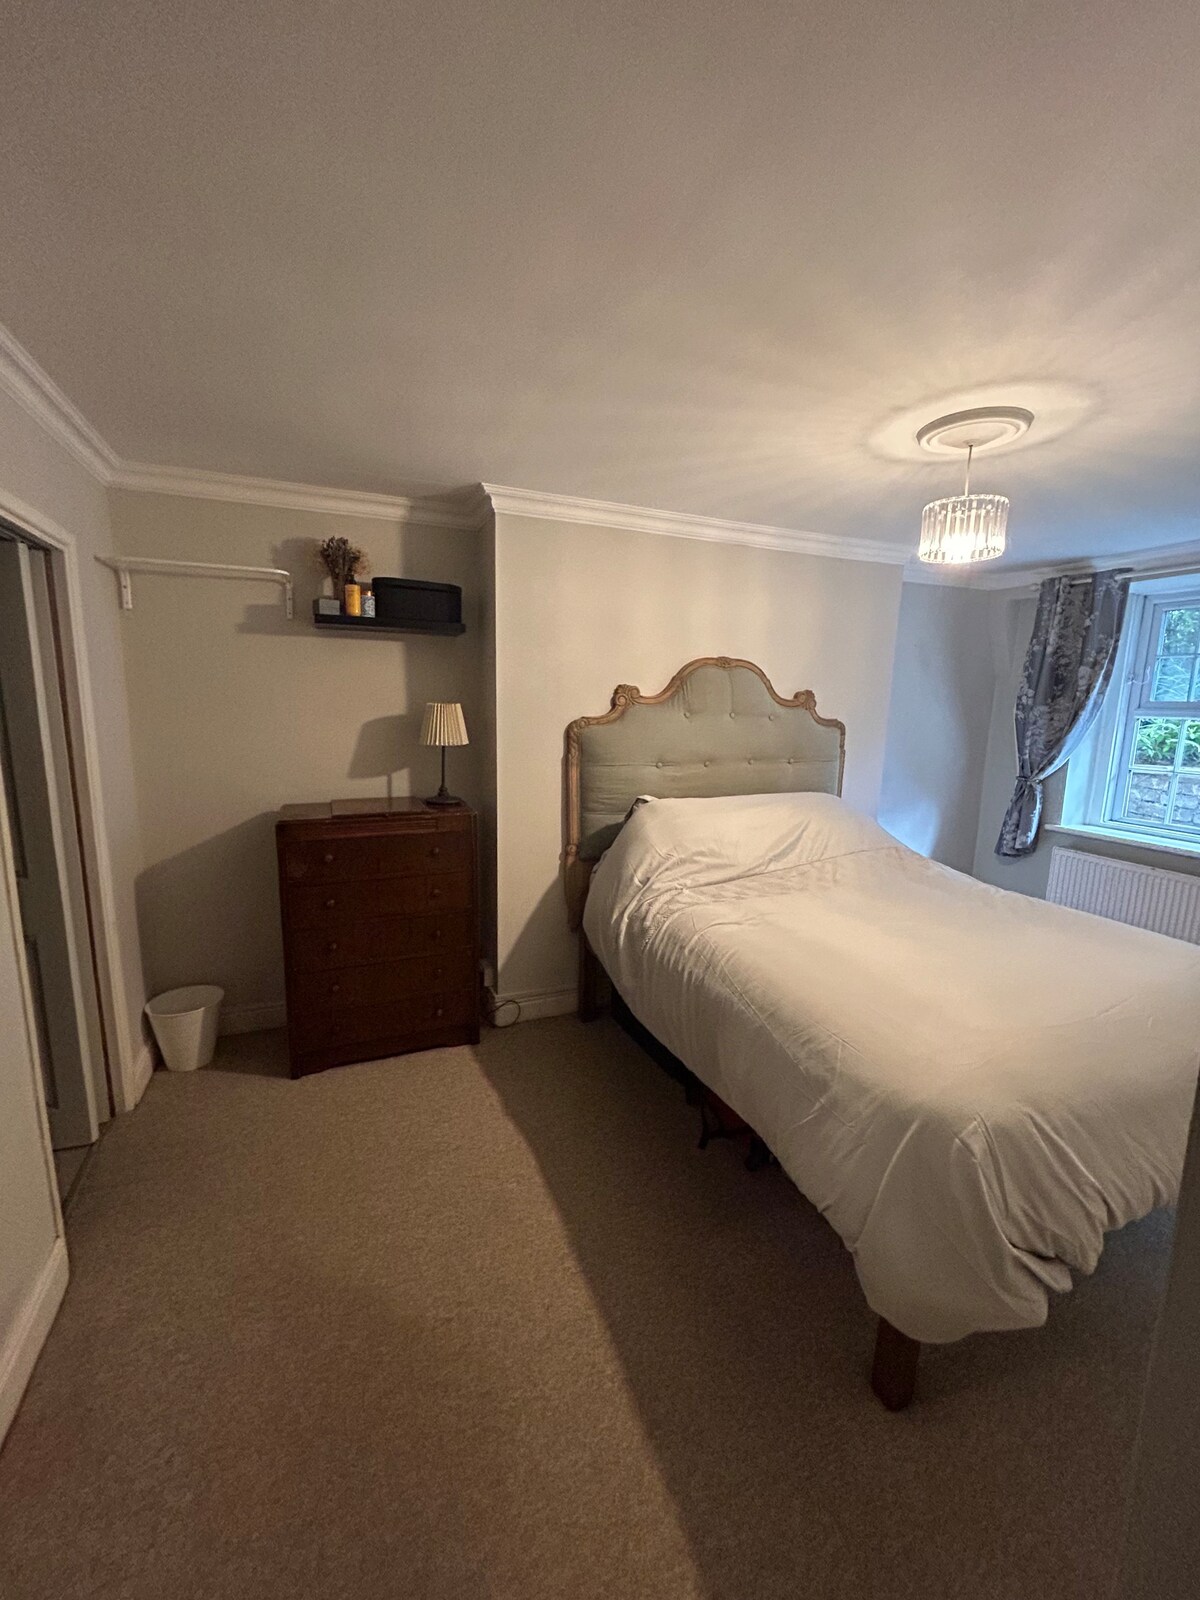 1 bed flat in central Cheltenham